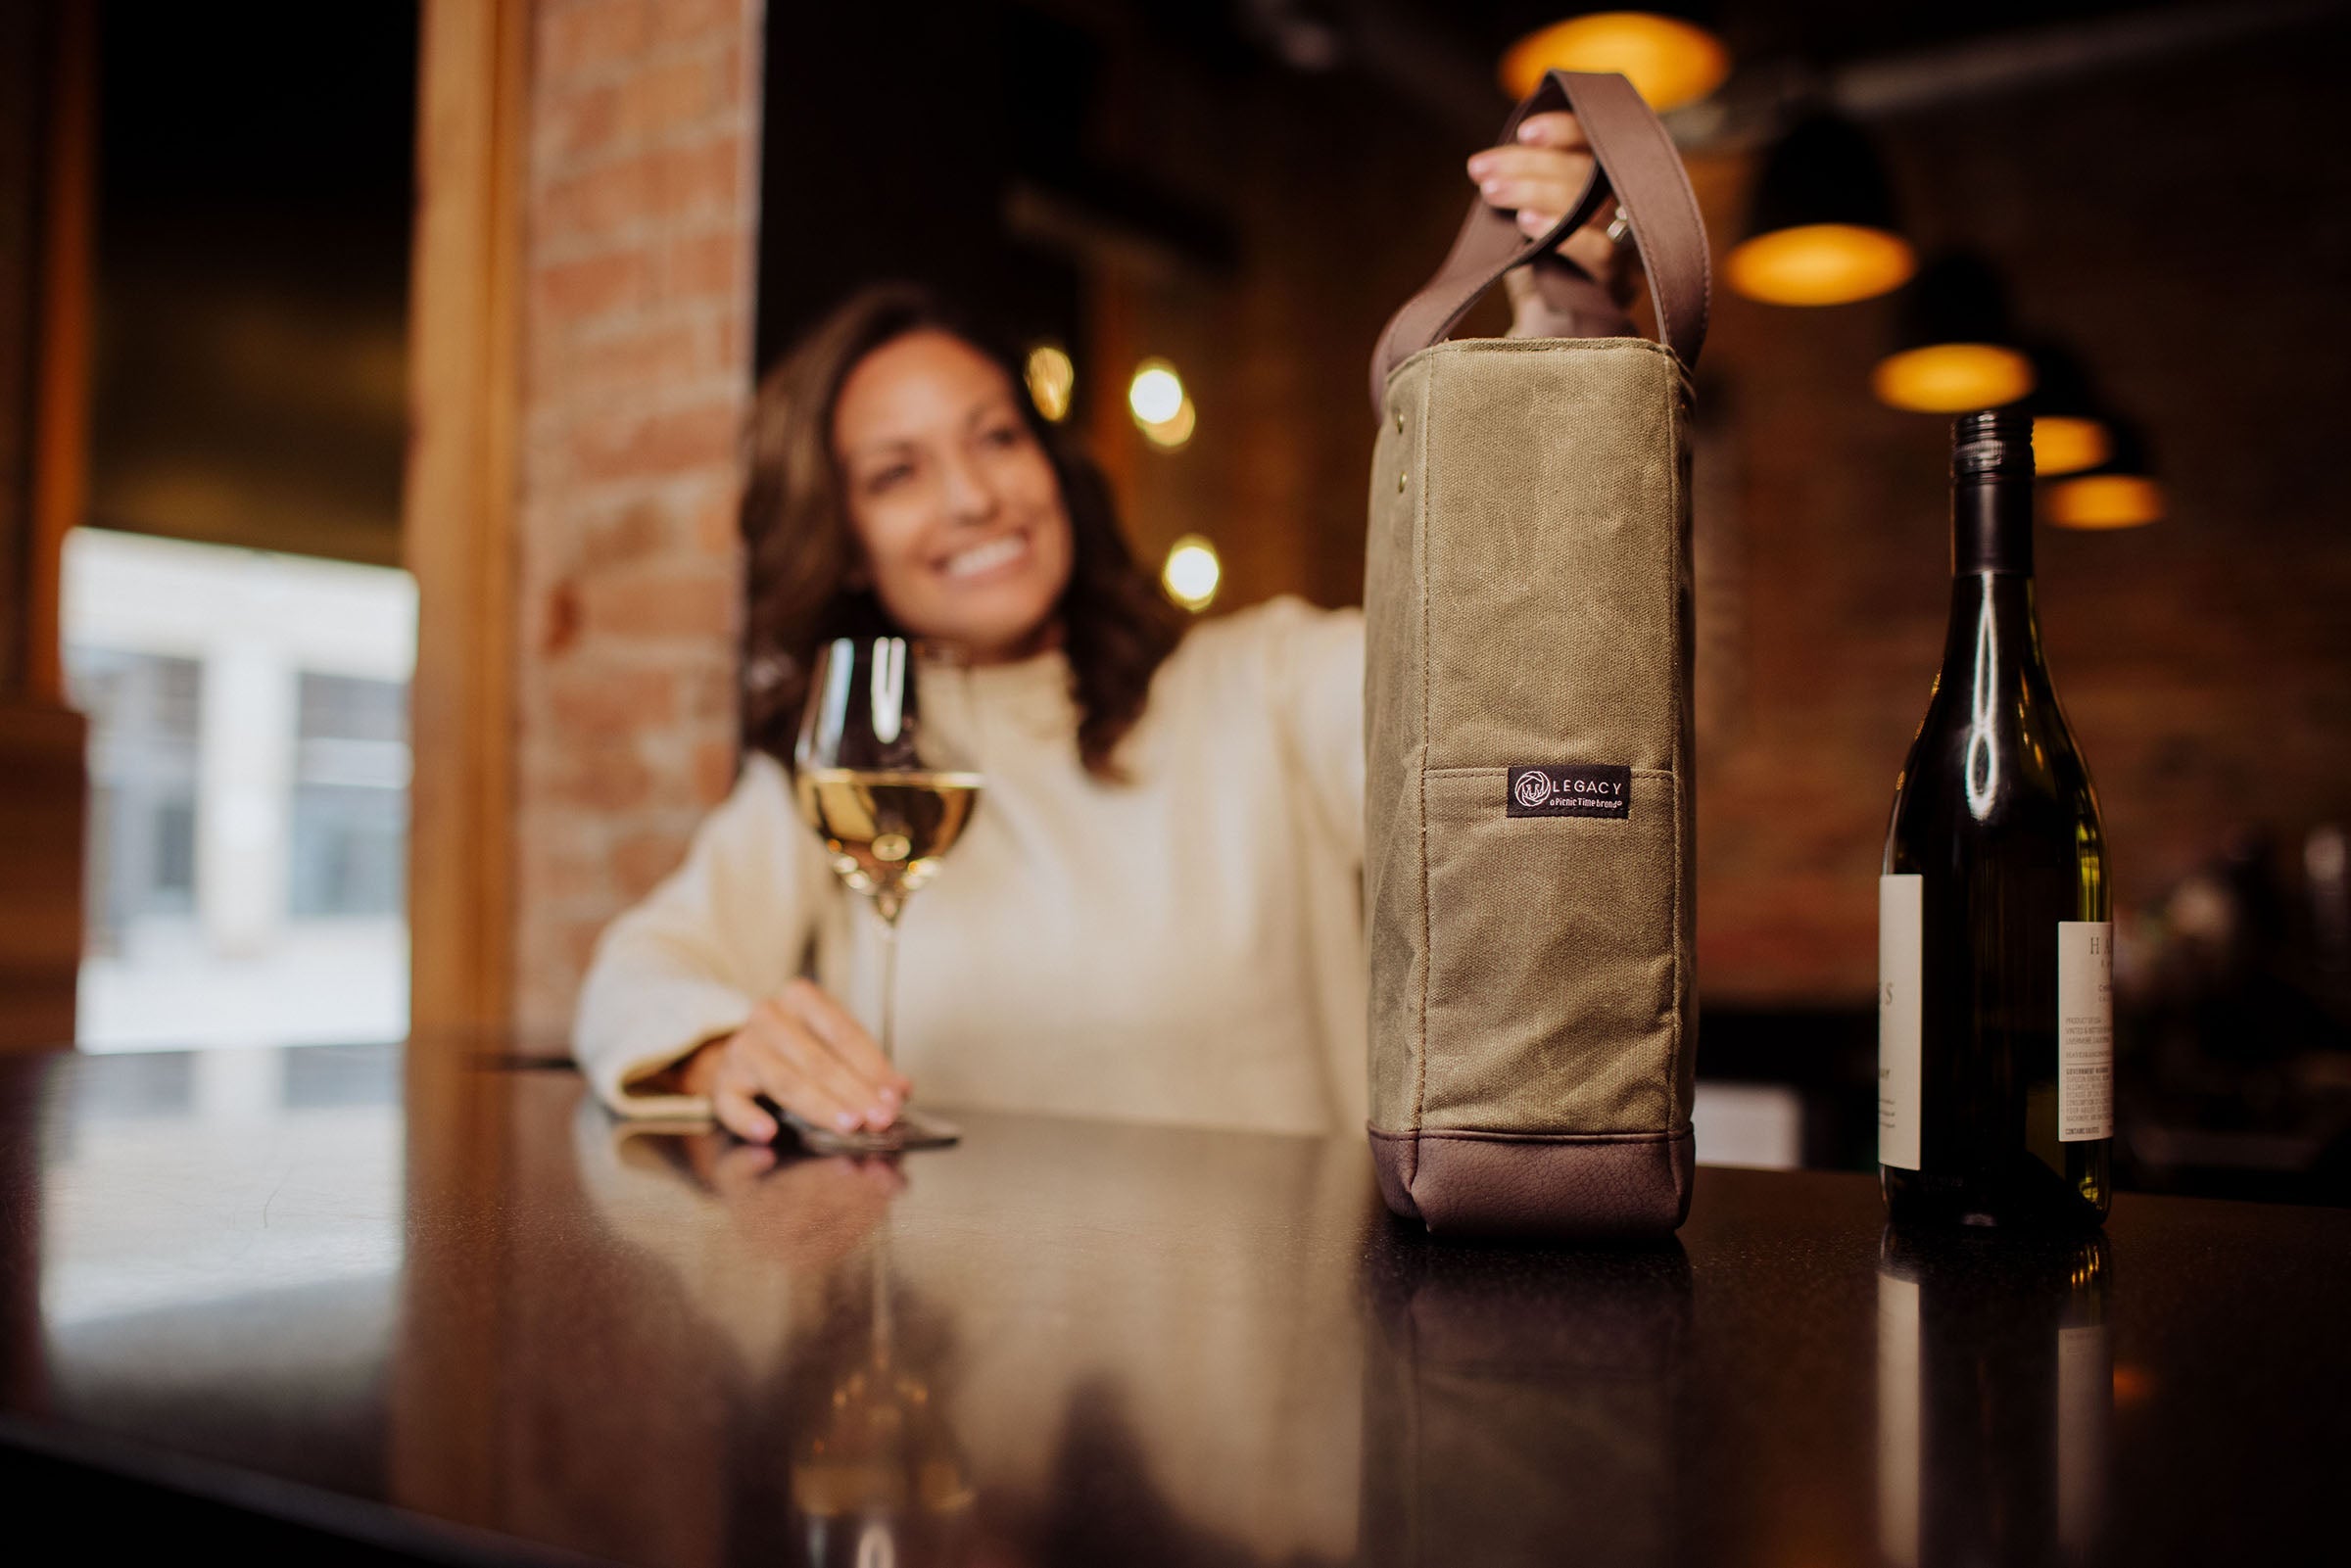 Philadelphia Eagles - 2 Bottle Insulated Wine Cooler Bag